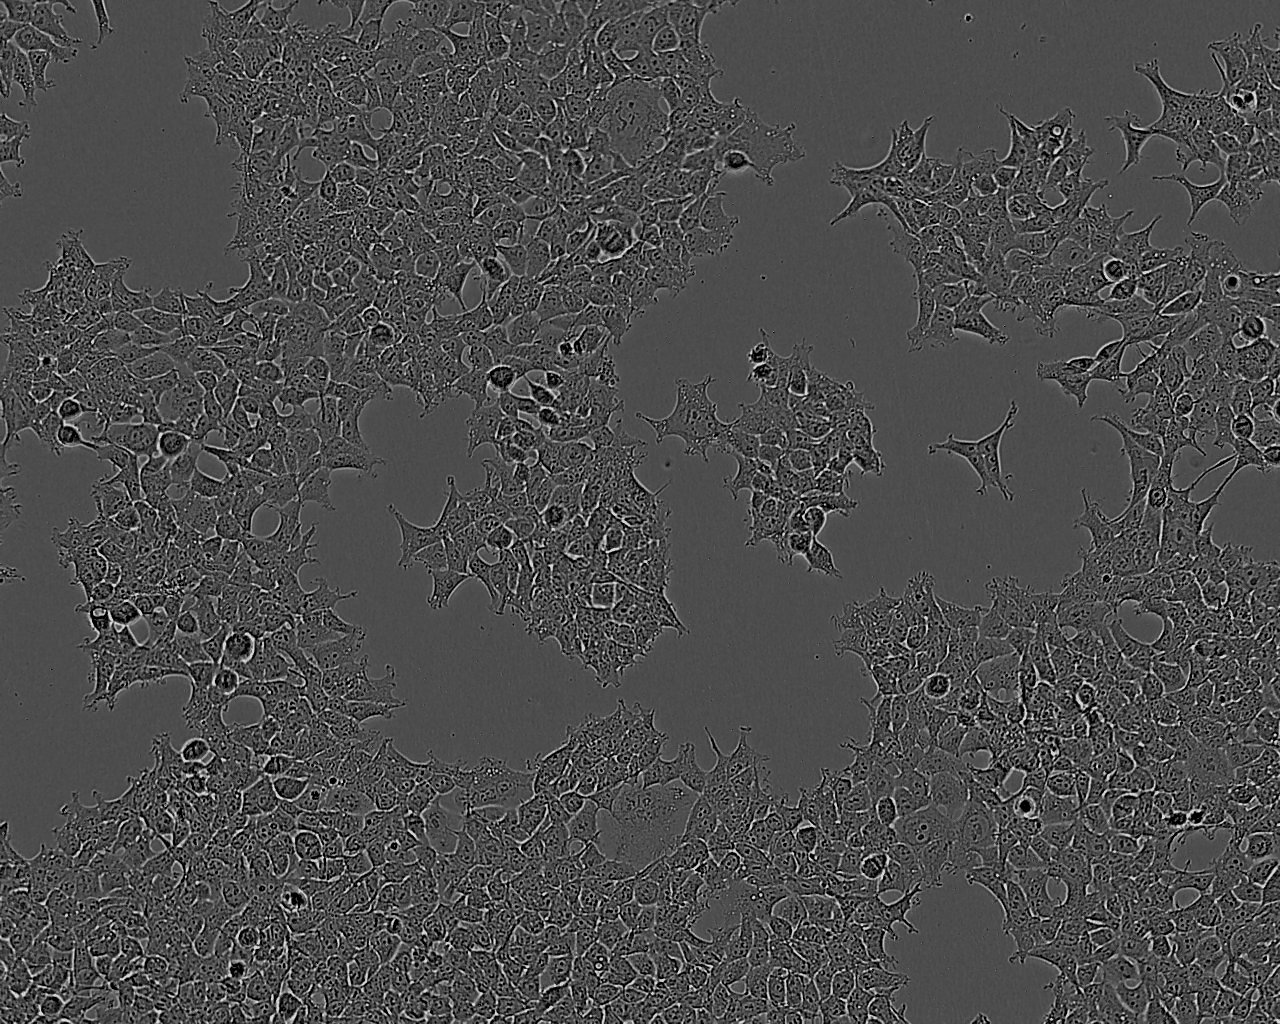 NCI-H711 Cells|人肺癌可传代细胞系